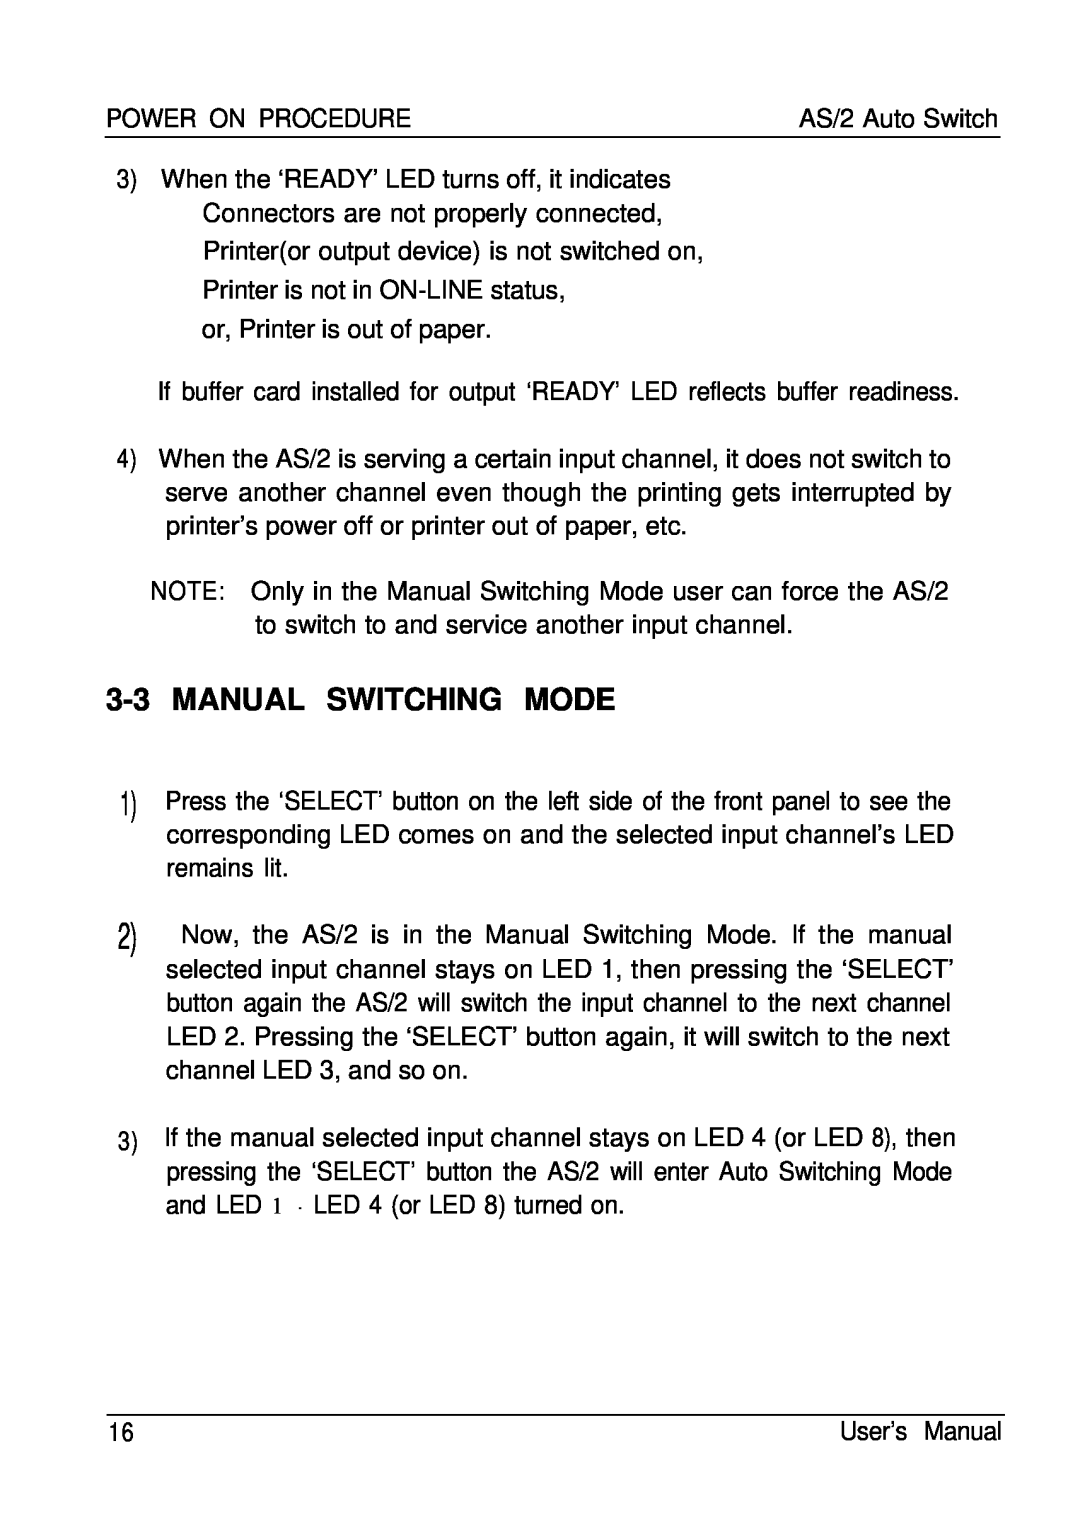 ATEN Technology AS-411S, AS-811P, AS-811S, AS-411P user manual Manual Switching Mode 